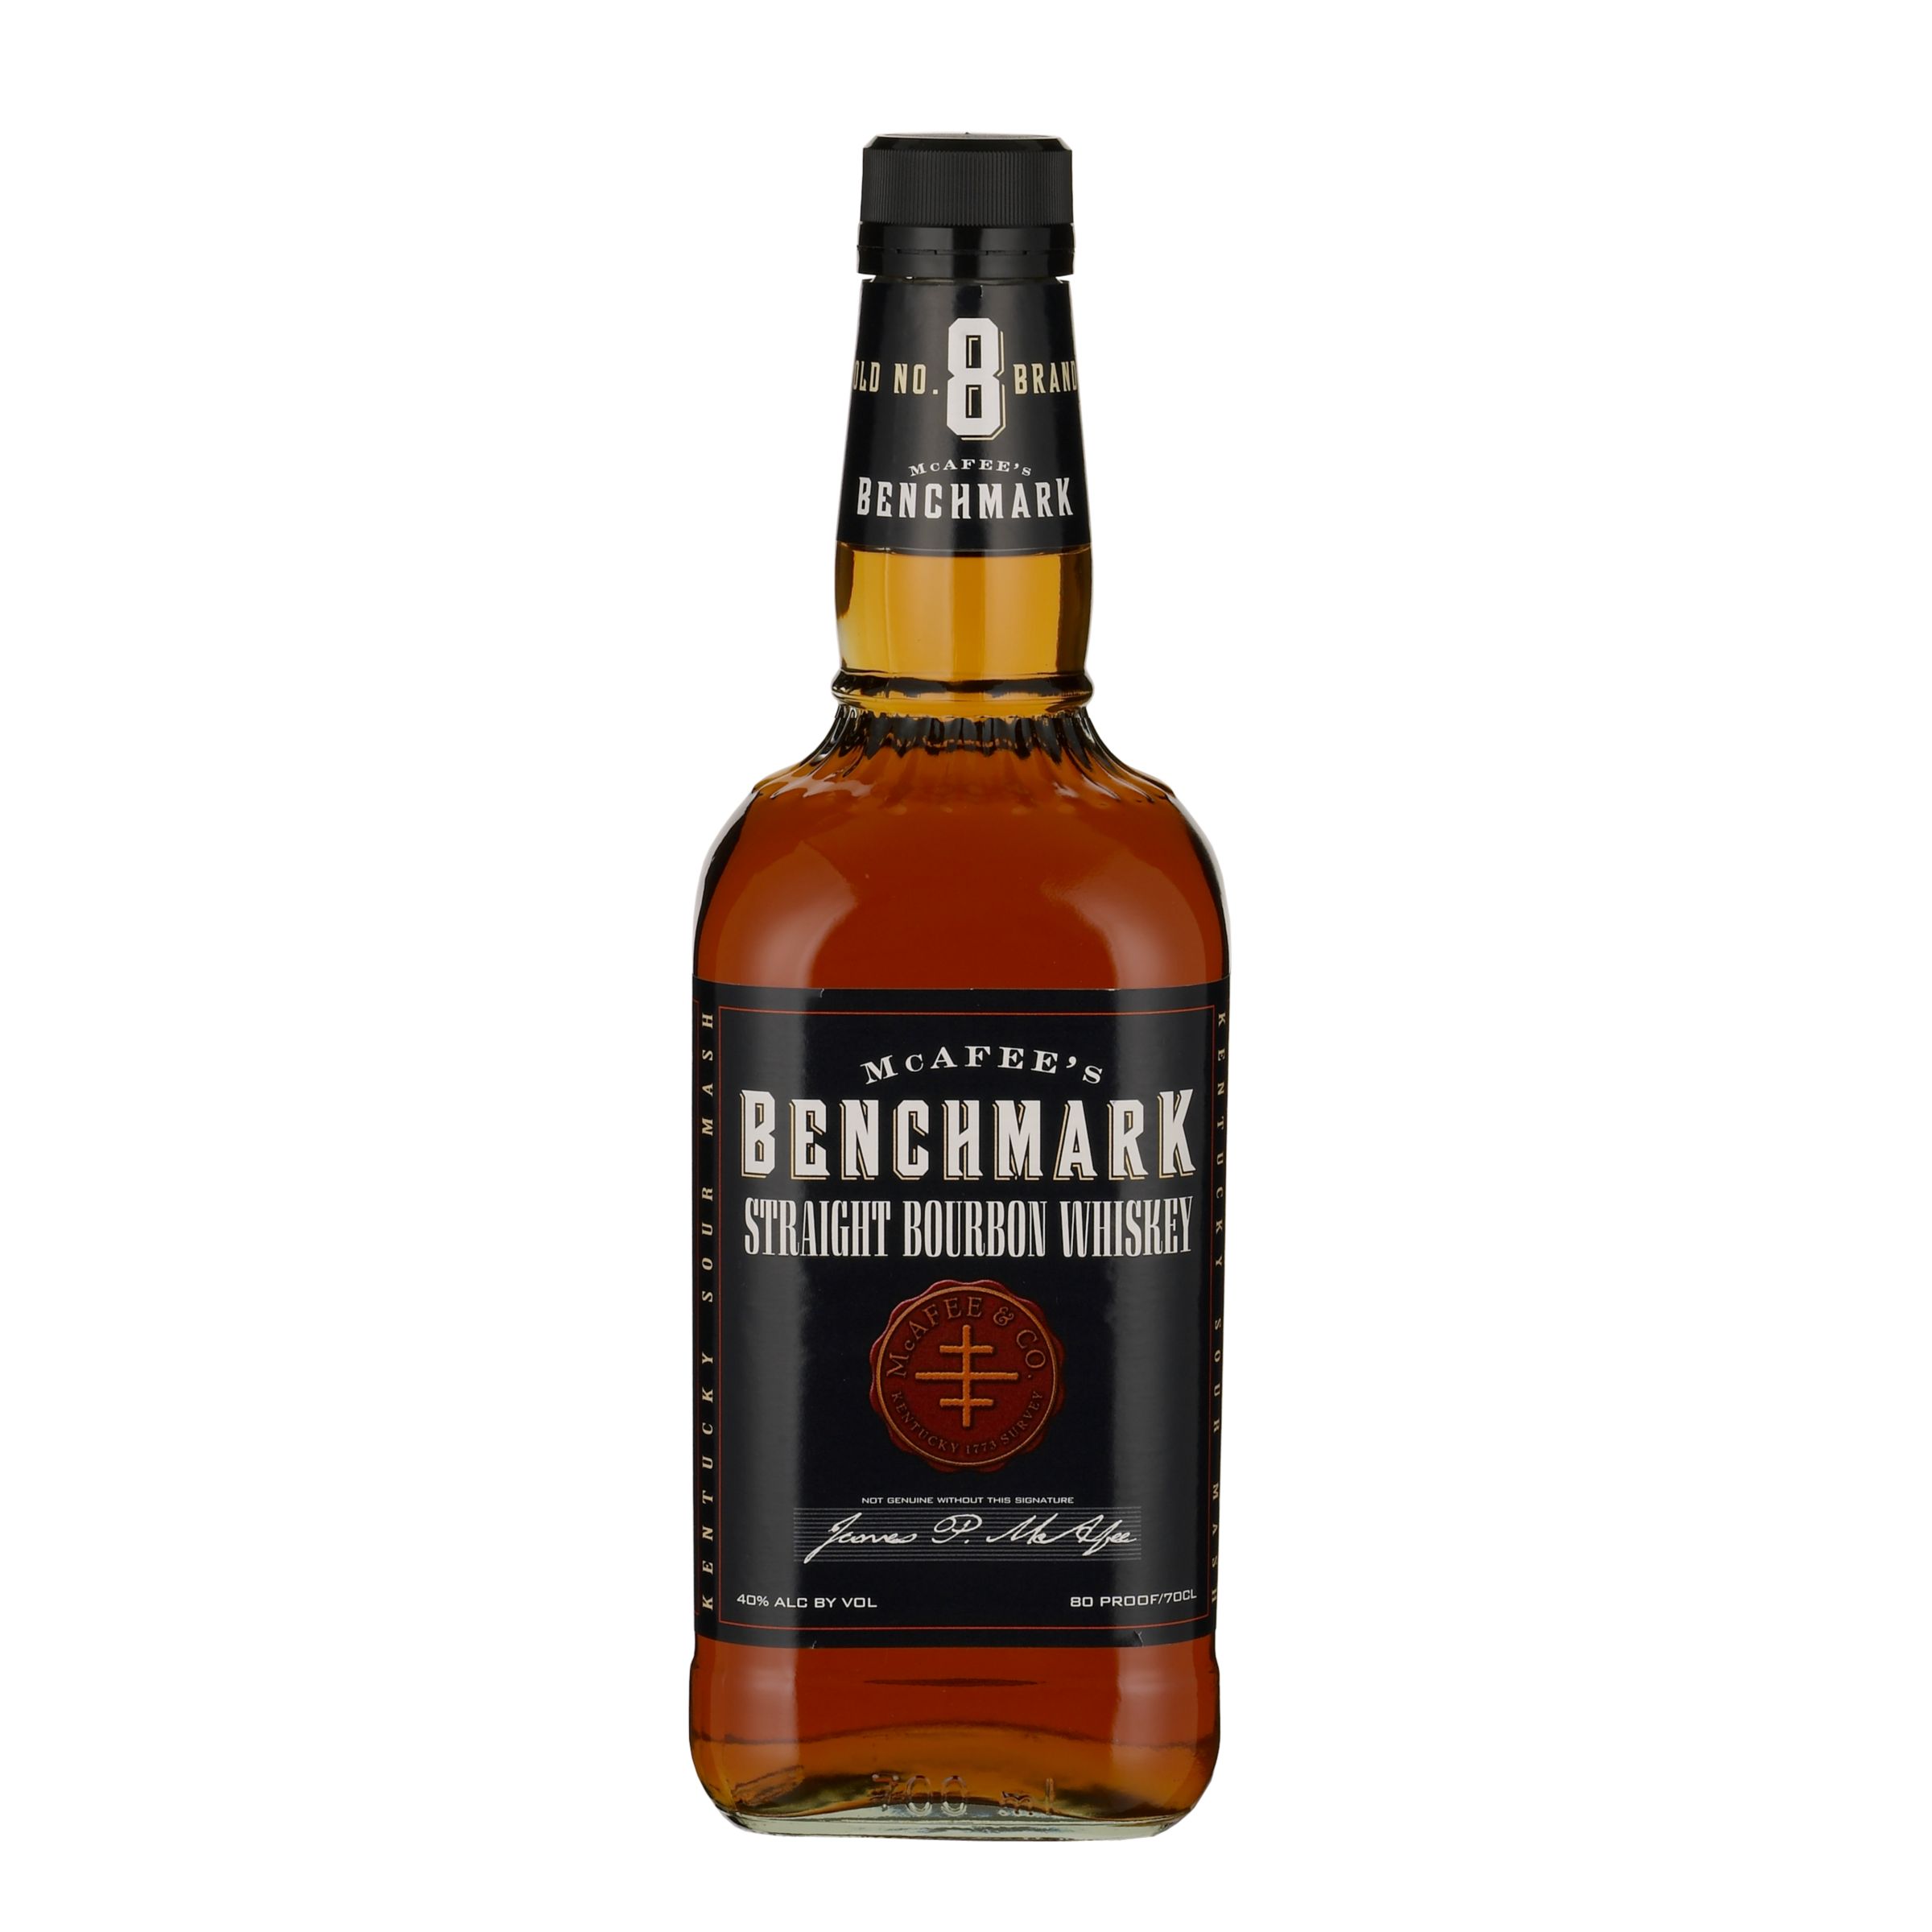 Benchmark Straight Bourbon Whiskey at John Lewis